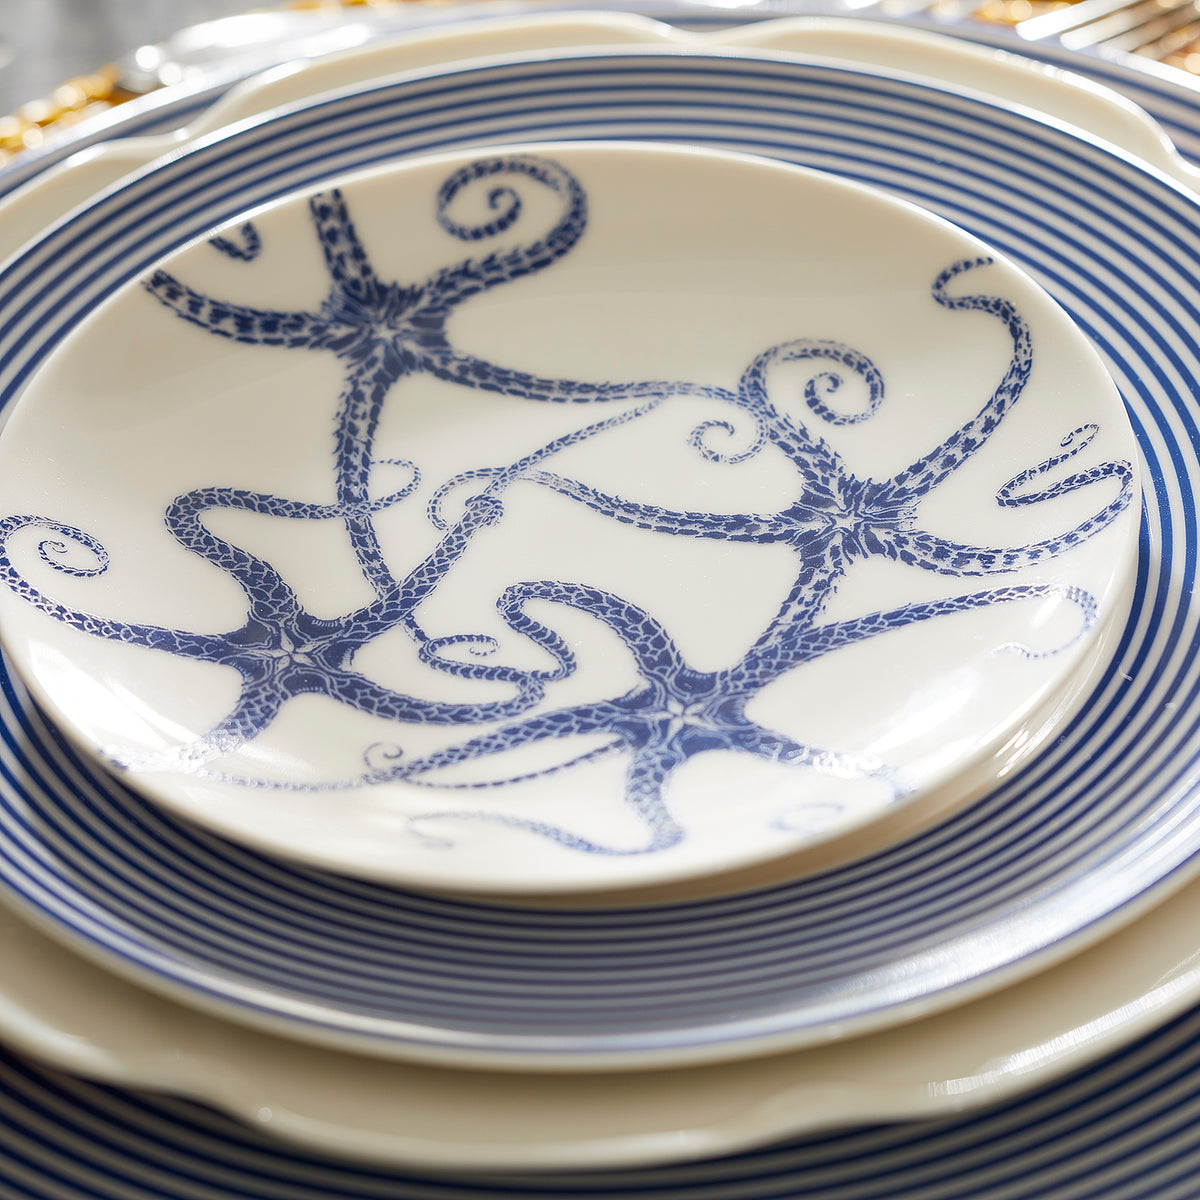 A Starfish Canapé Plate with an octopus design by Caskata Artisanal Home.